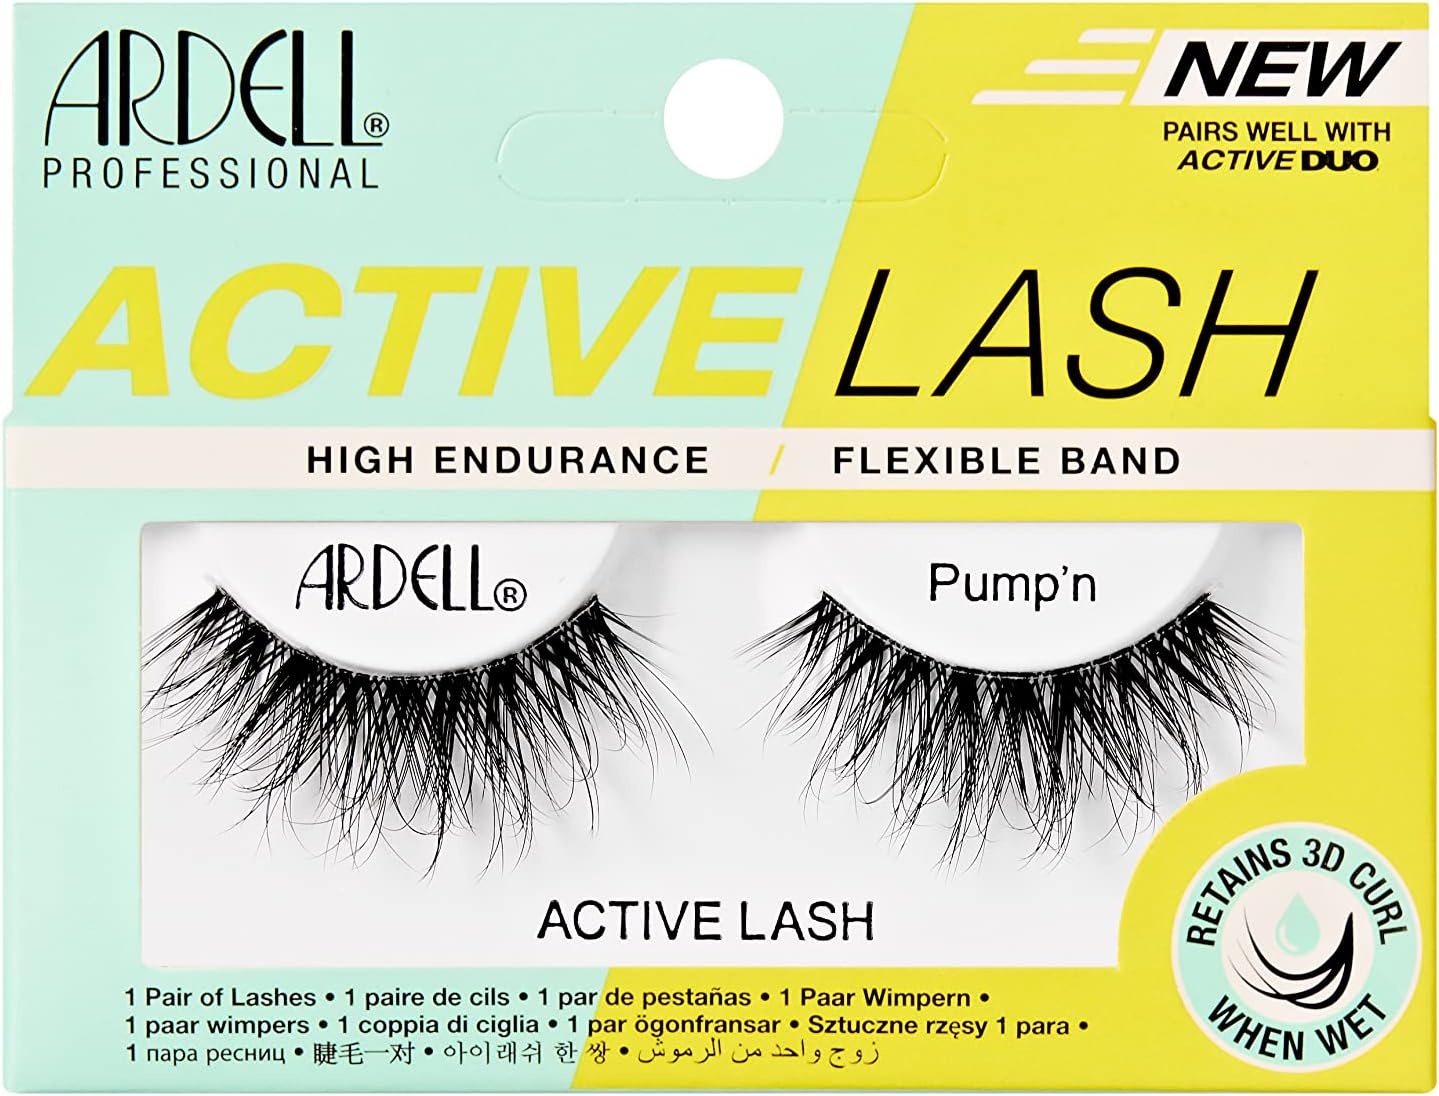 Ardell Active Lash Pump'n False Eyelashes, Water-resistant, Medium Volume and Length, Vegan Friendly, 1 Pair (Pack of 1)